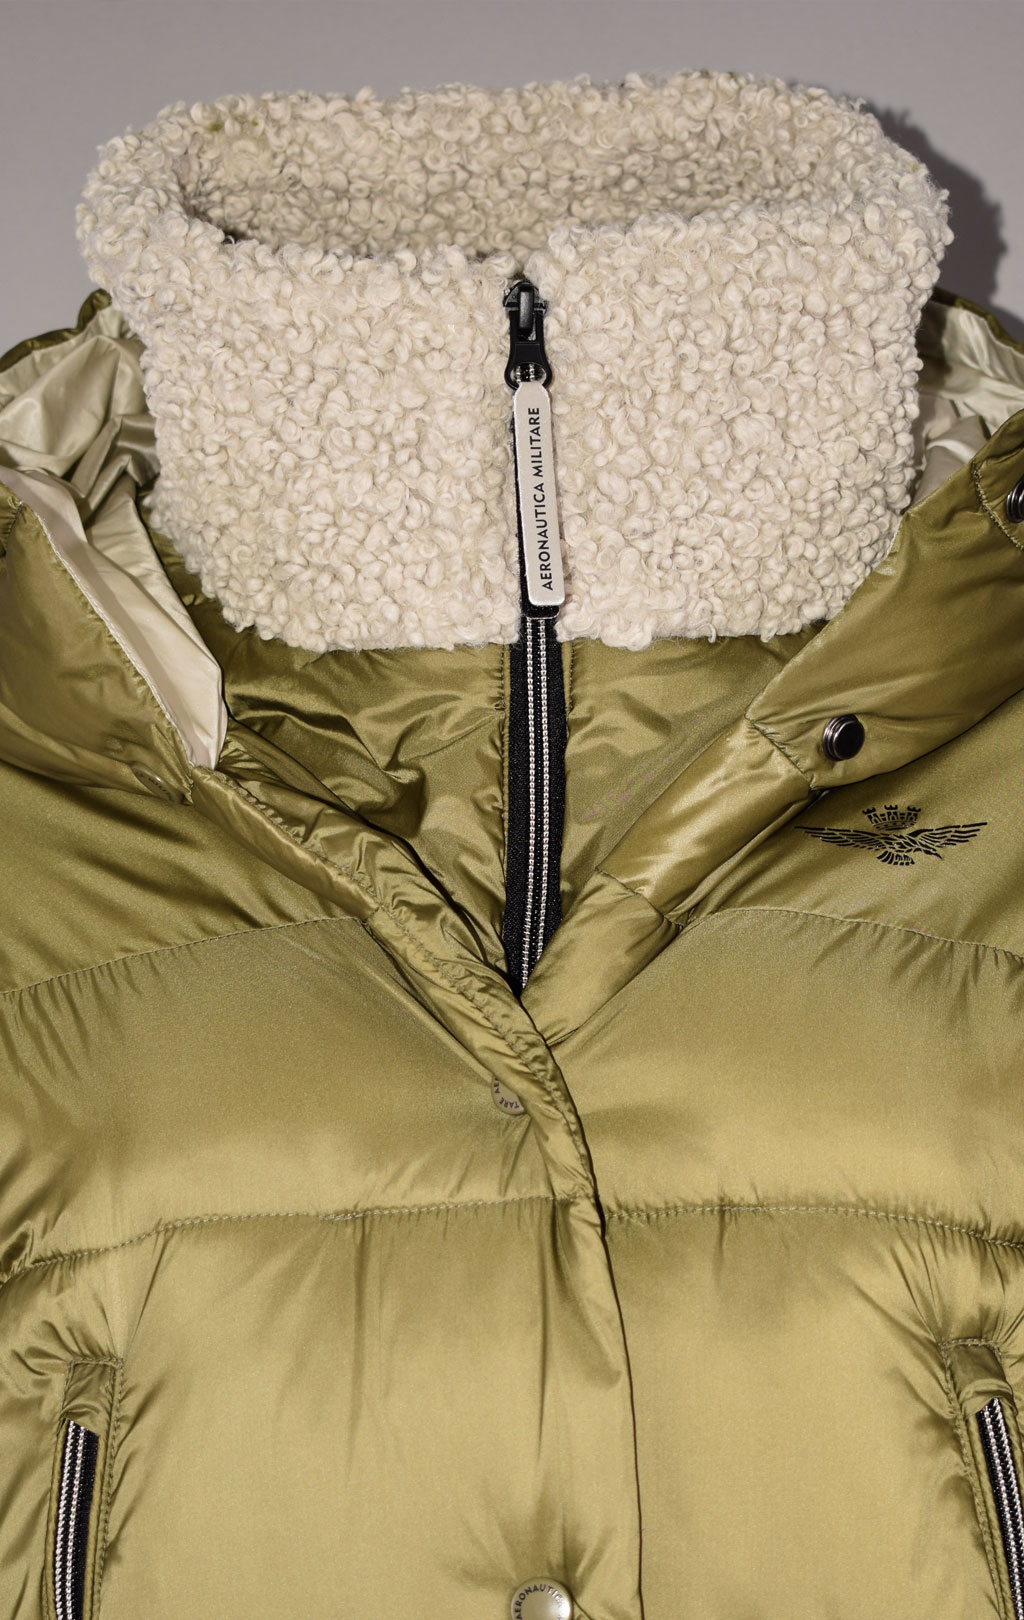 Женское пальто AERONAUTICA MILITARE FW 22/23 m/CN verde oliva (AB 2046) 